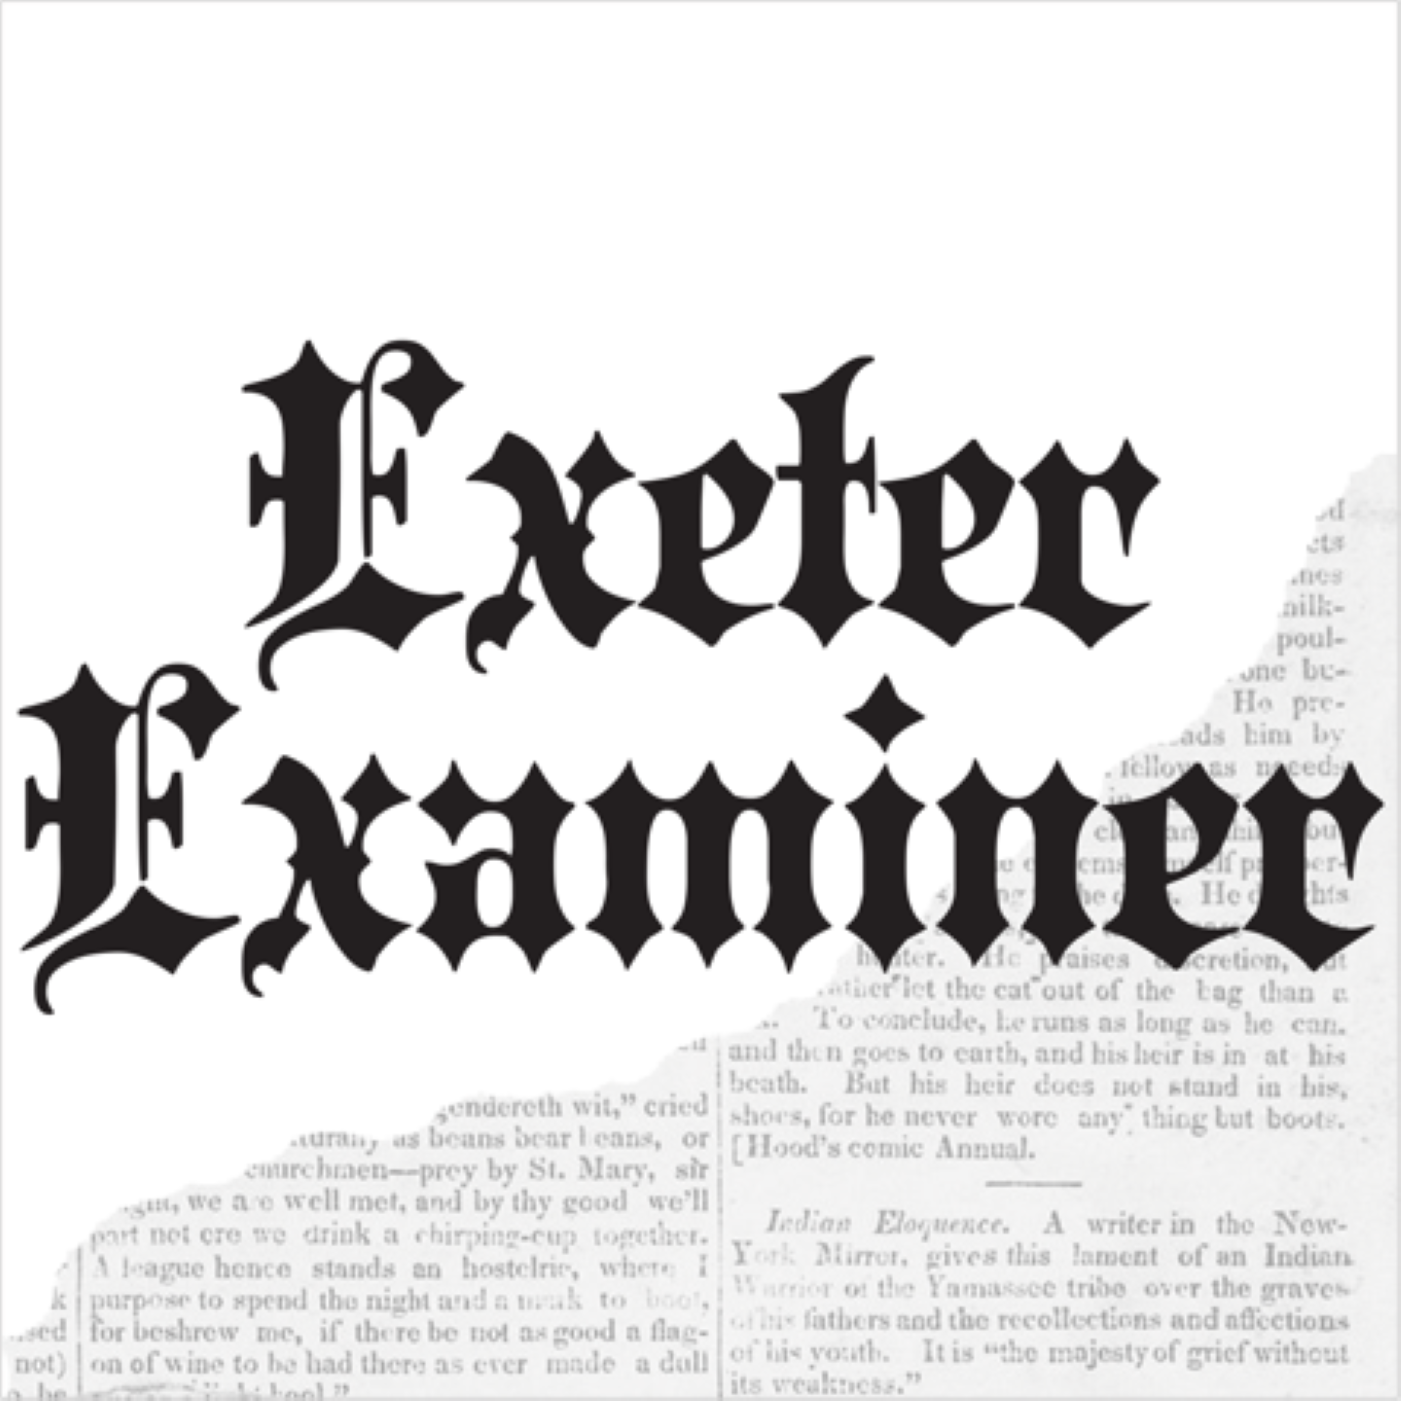 Show artwork for Exeter Examiner Stories